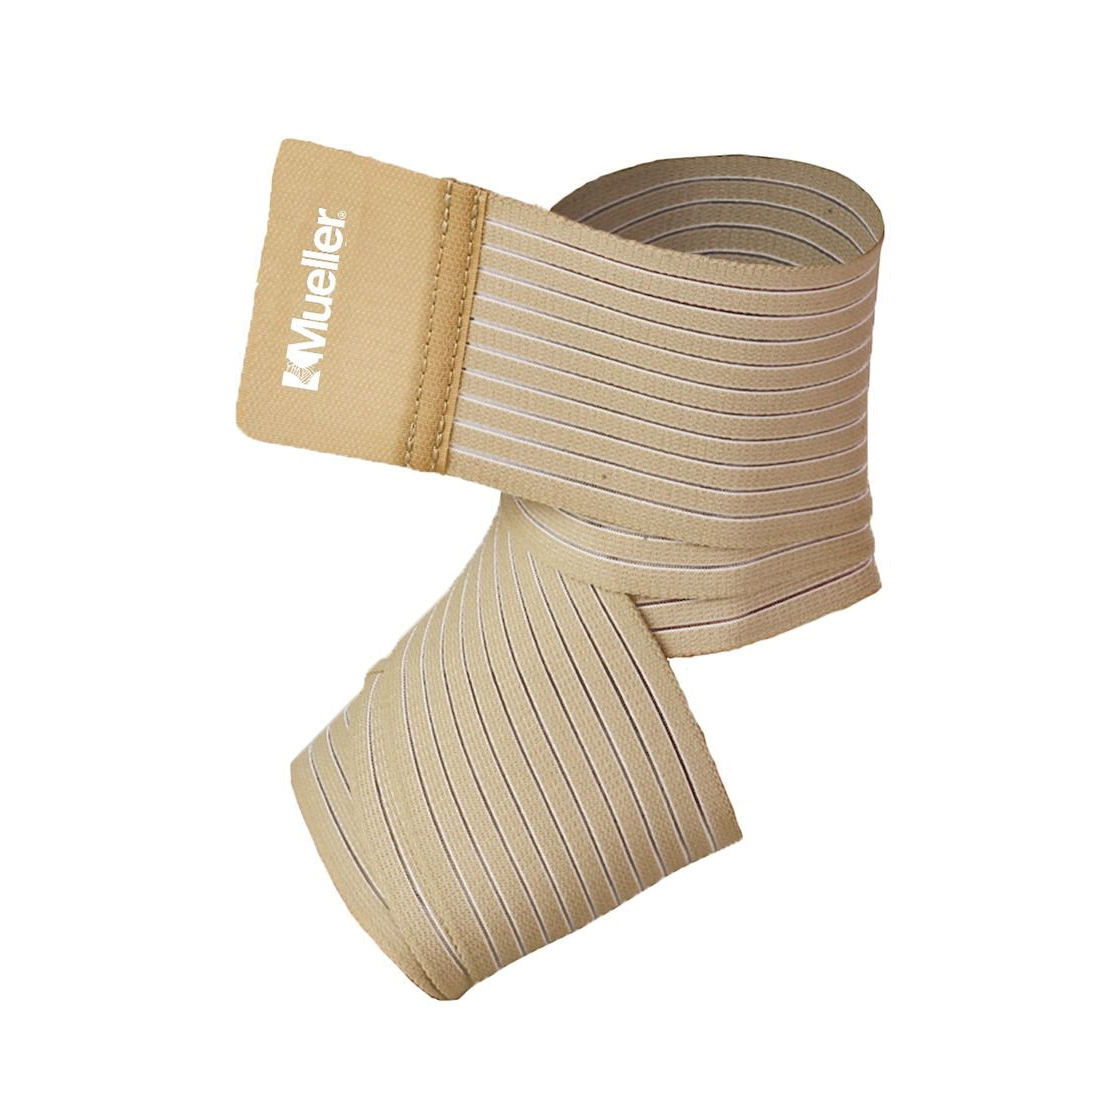 Mueller 4590 All-Purpose Support Wrap, Nylon/Fabric Bandage - 1